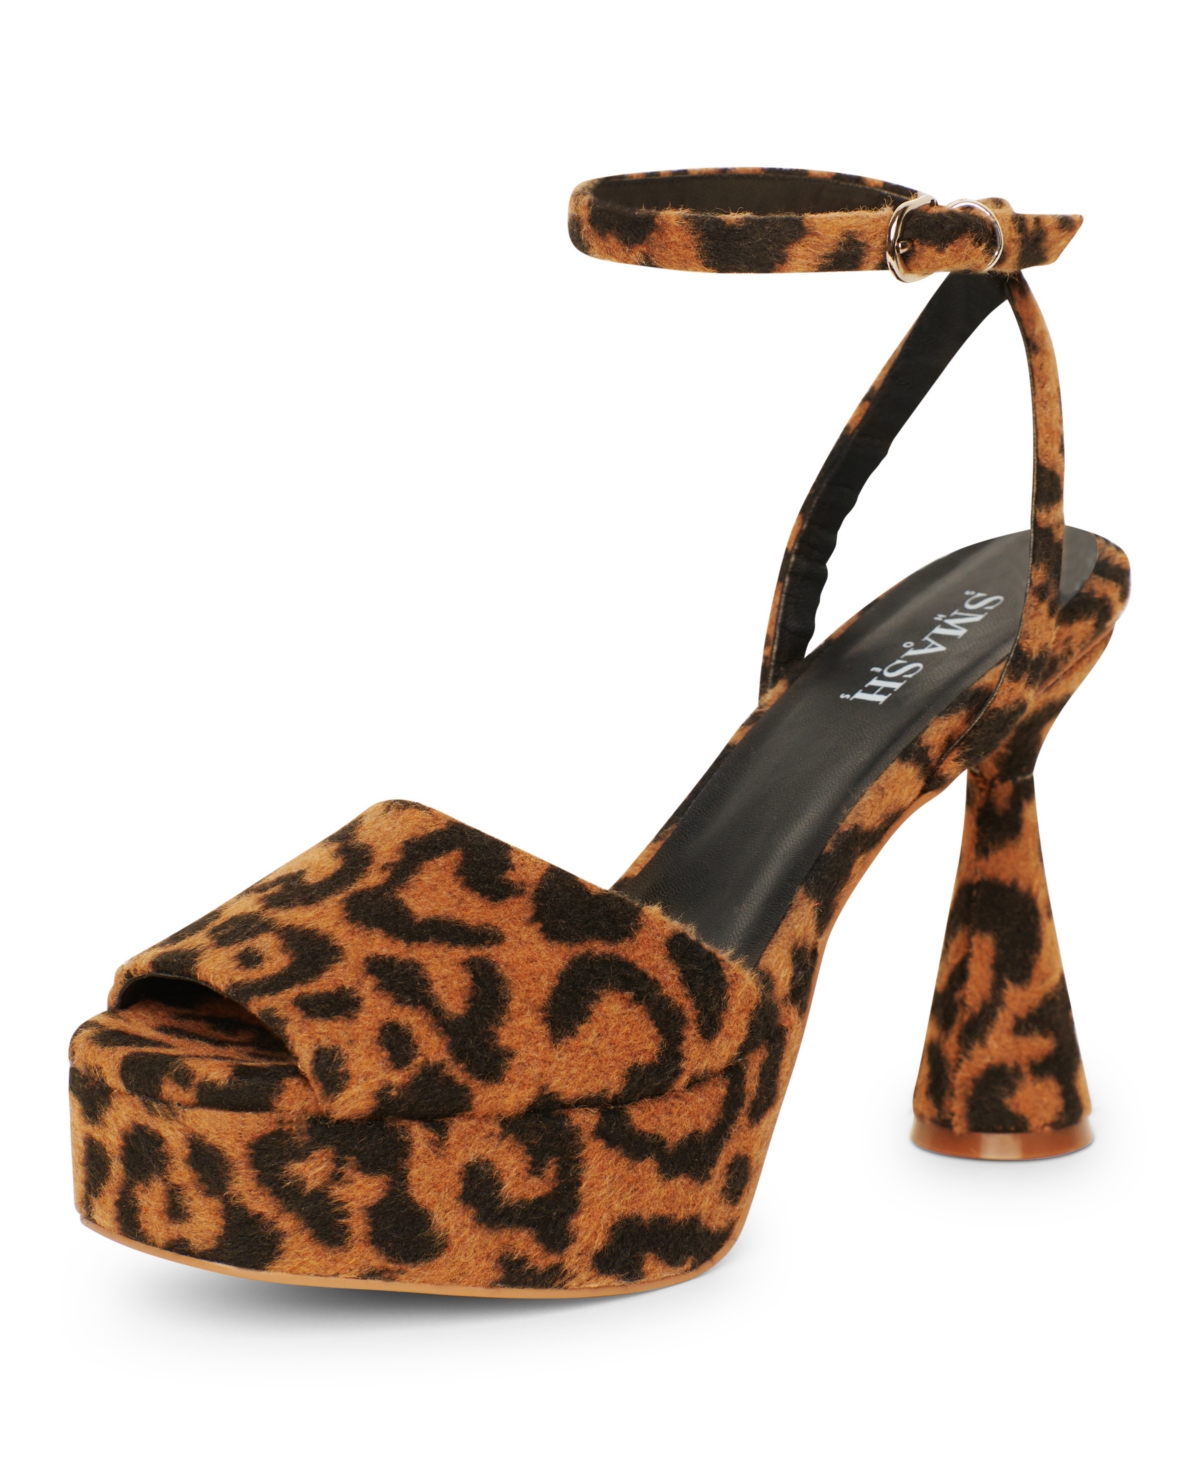 Women's Flora Architectural Heel Peep-Toe Platform Dress Sandals - Extended Sizes 10-14 - Leopard